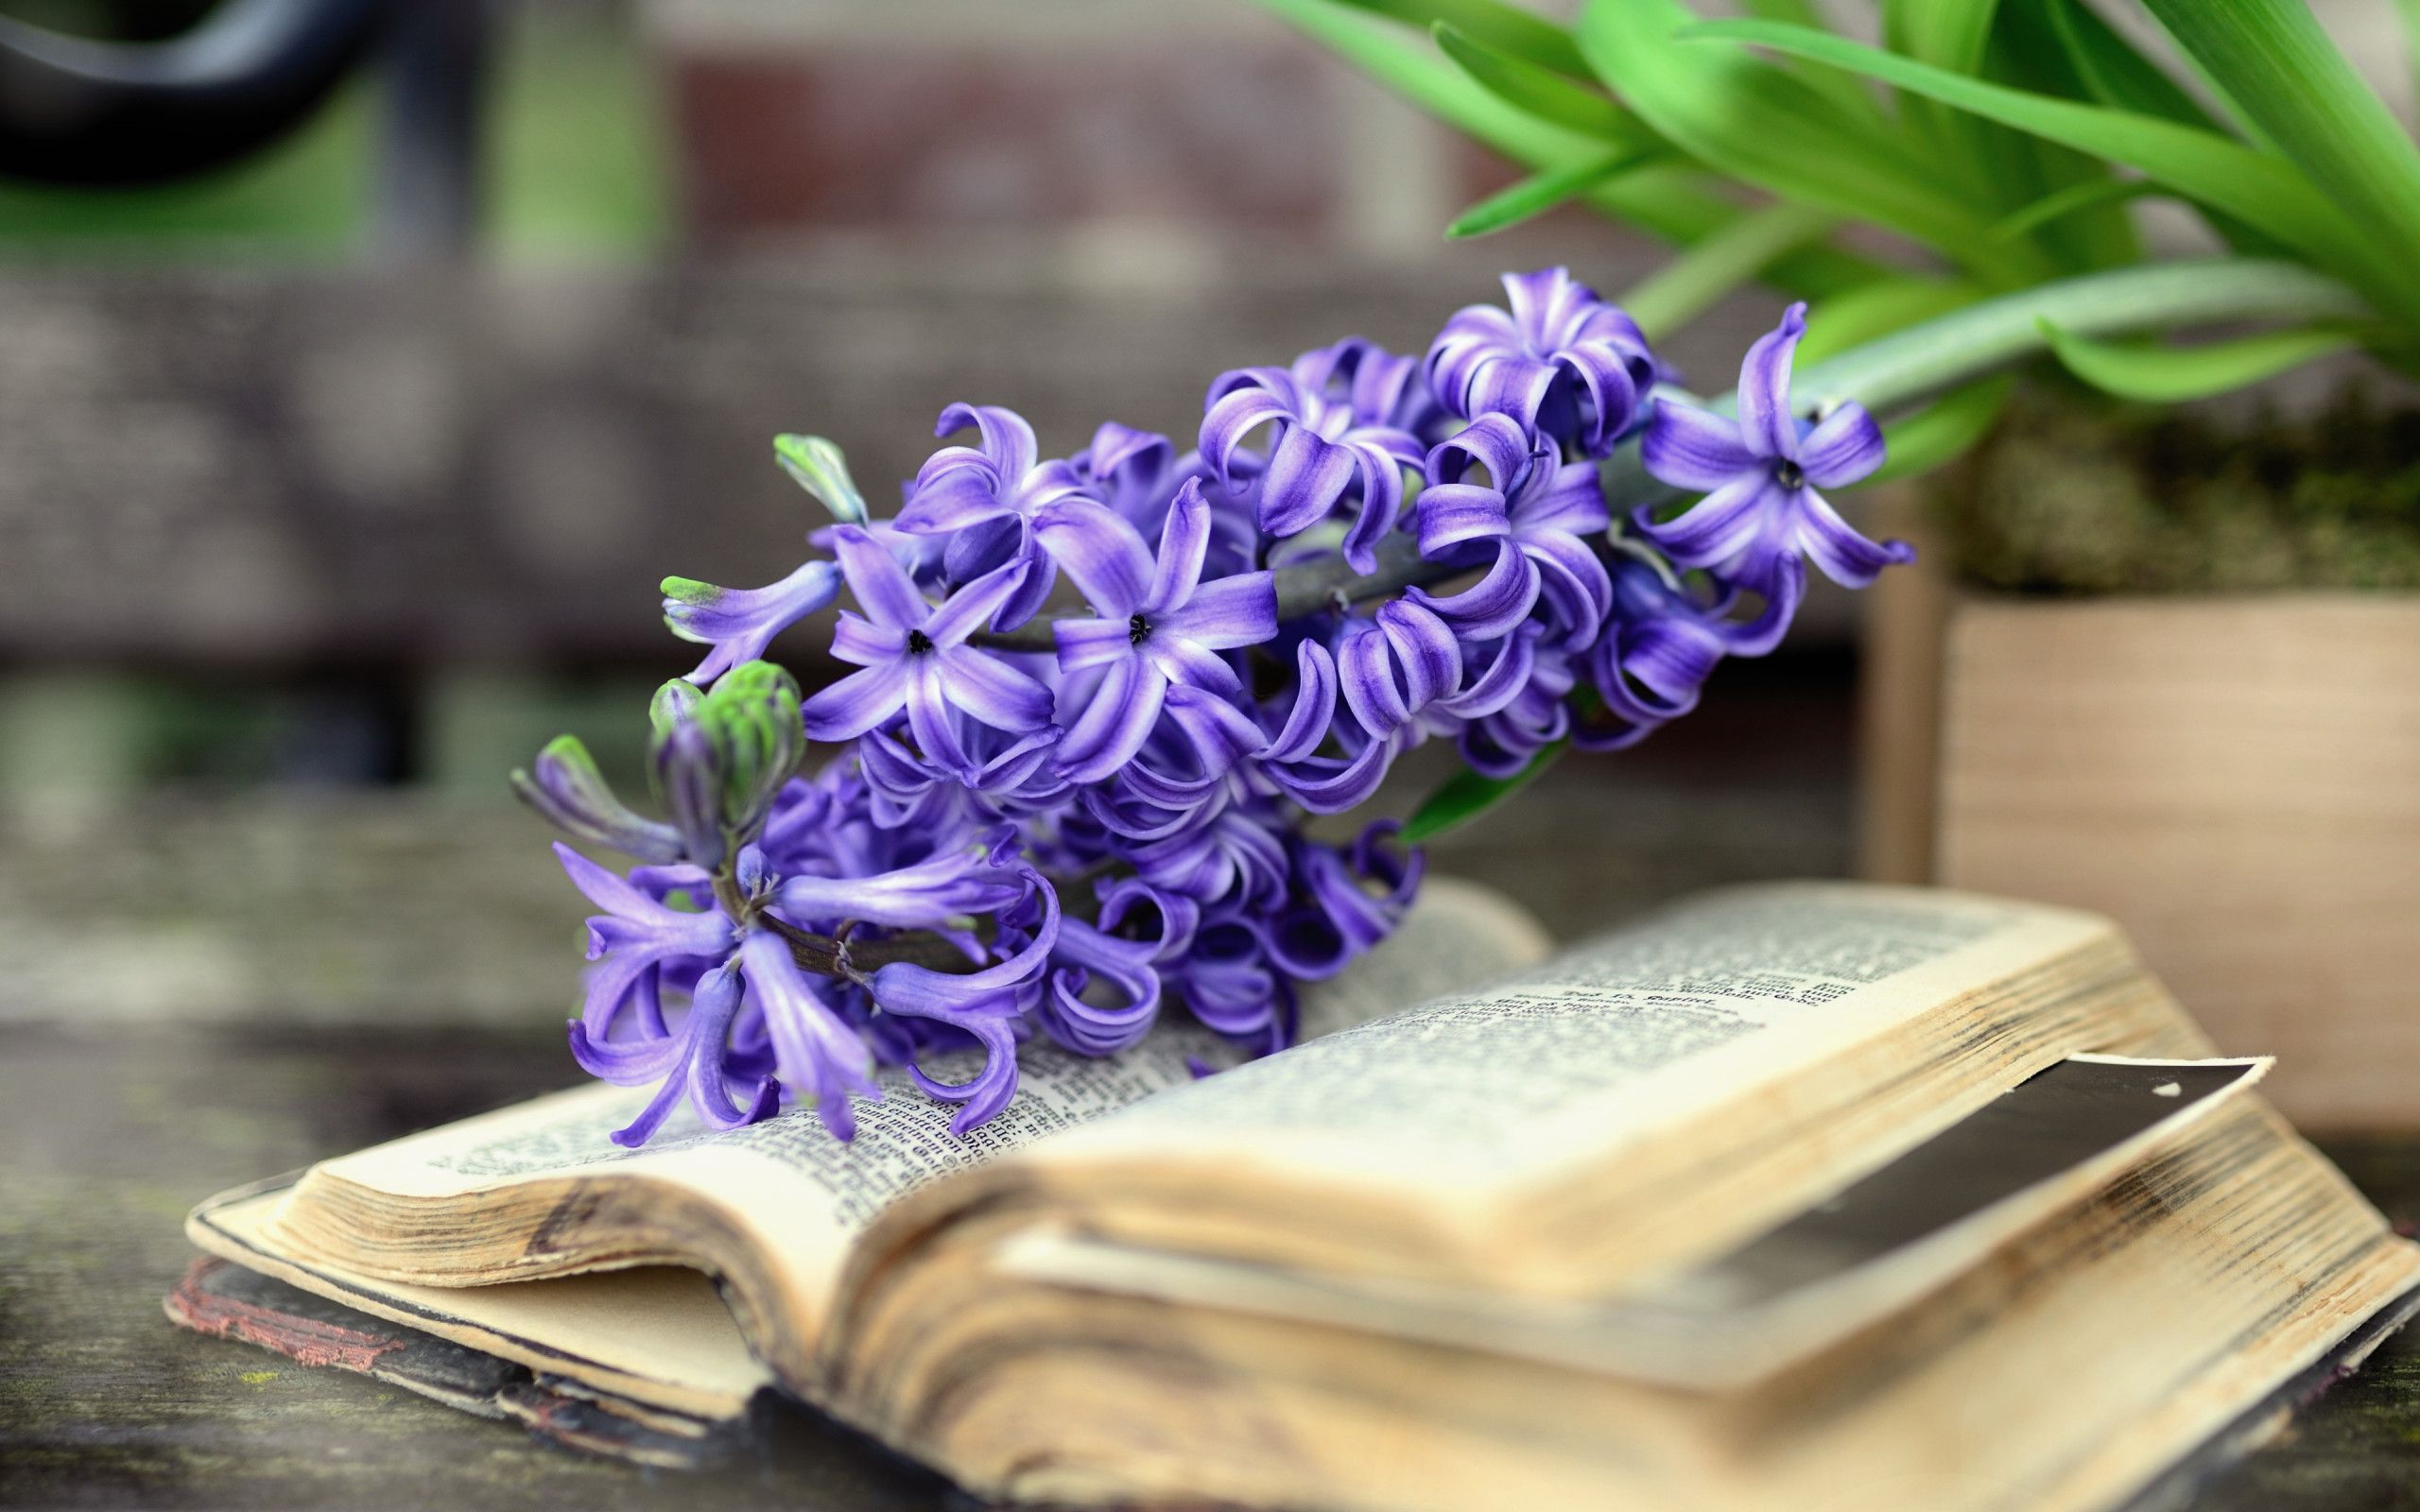 Download wallpaper: Hyacinth Spring flowers 2560x1600